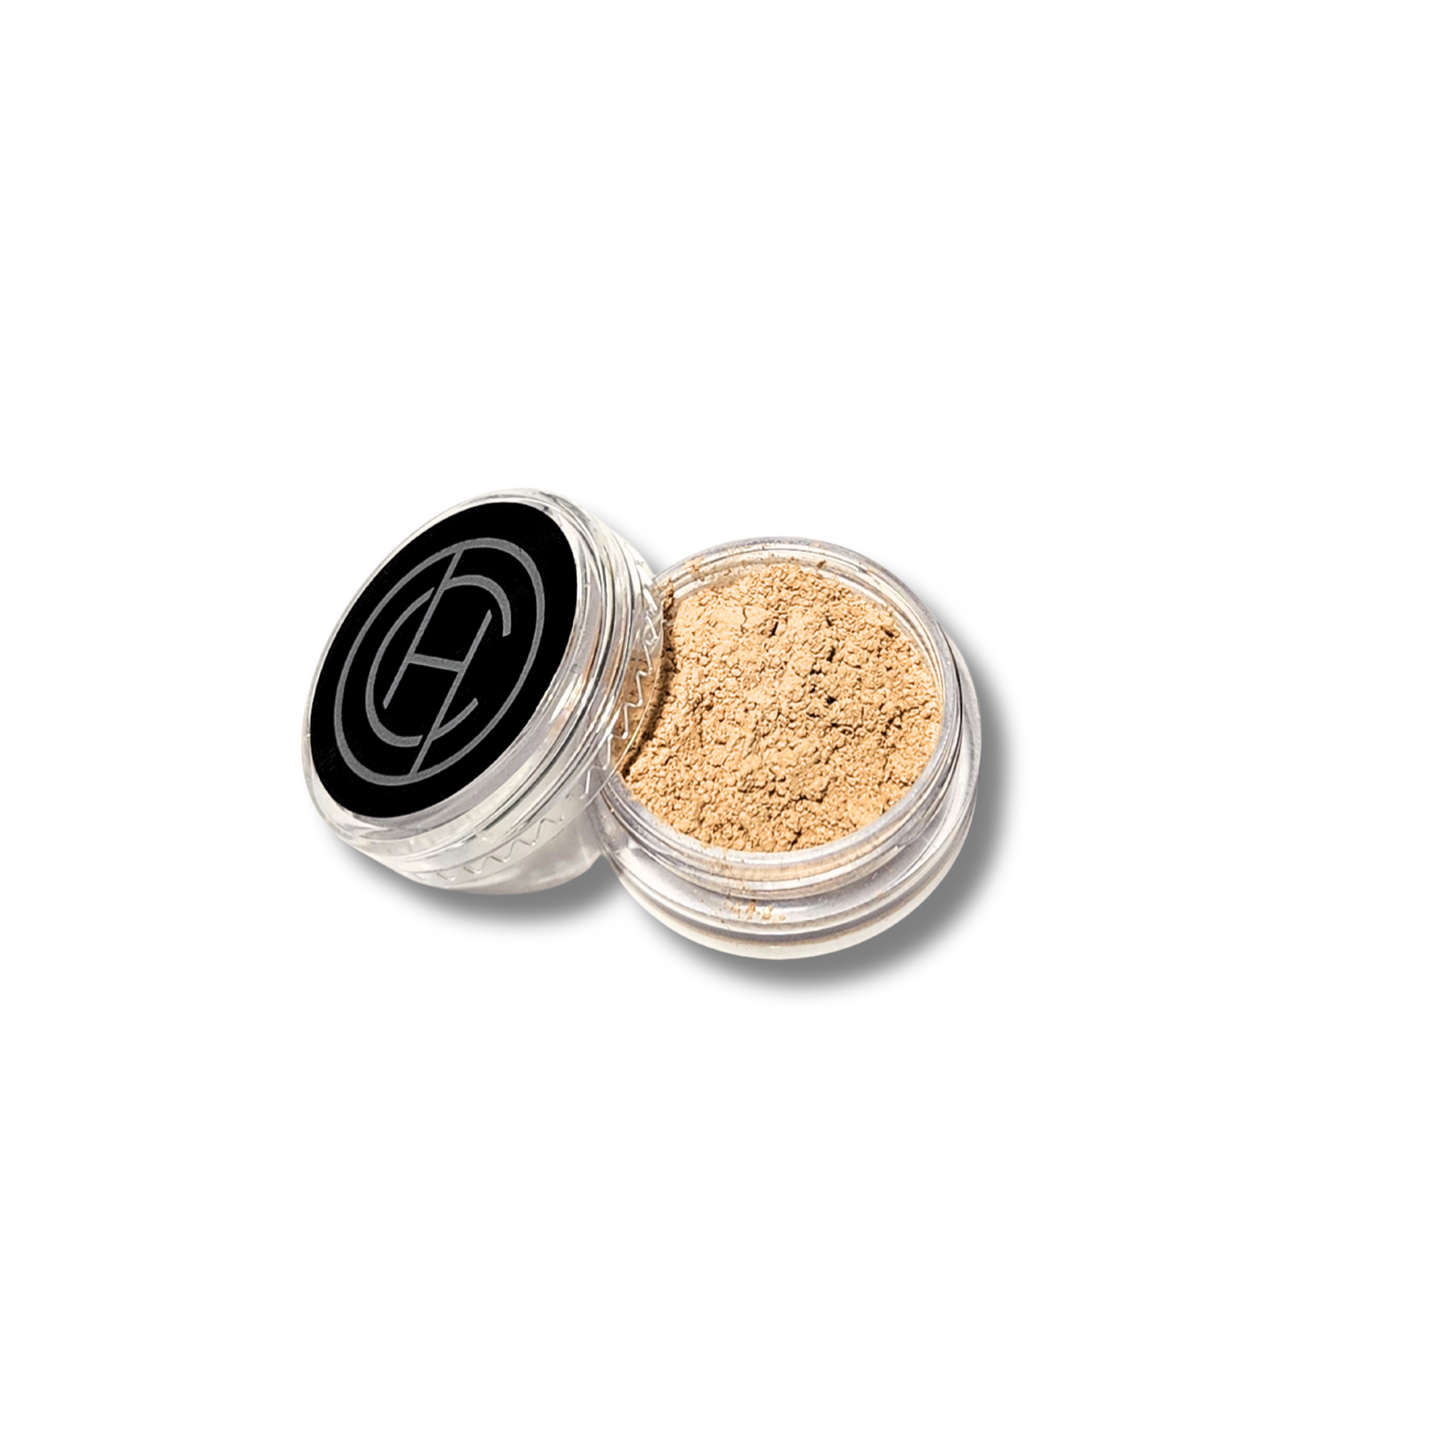 Chantal Hart Luxe Mineral Powder sample 3g